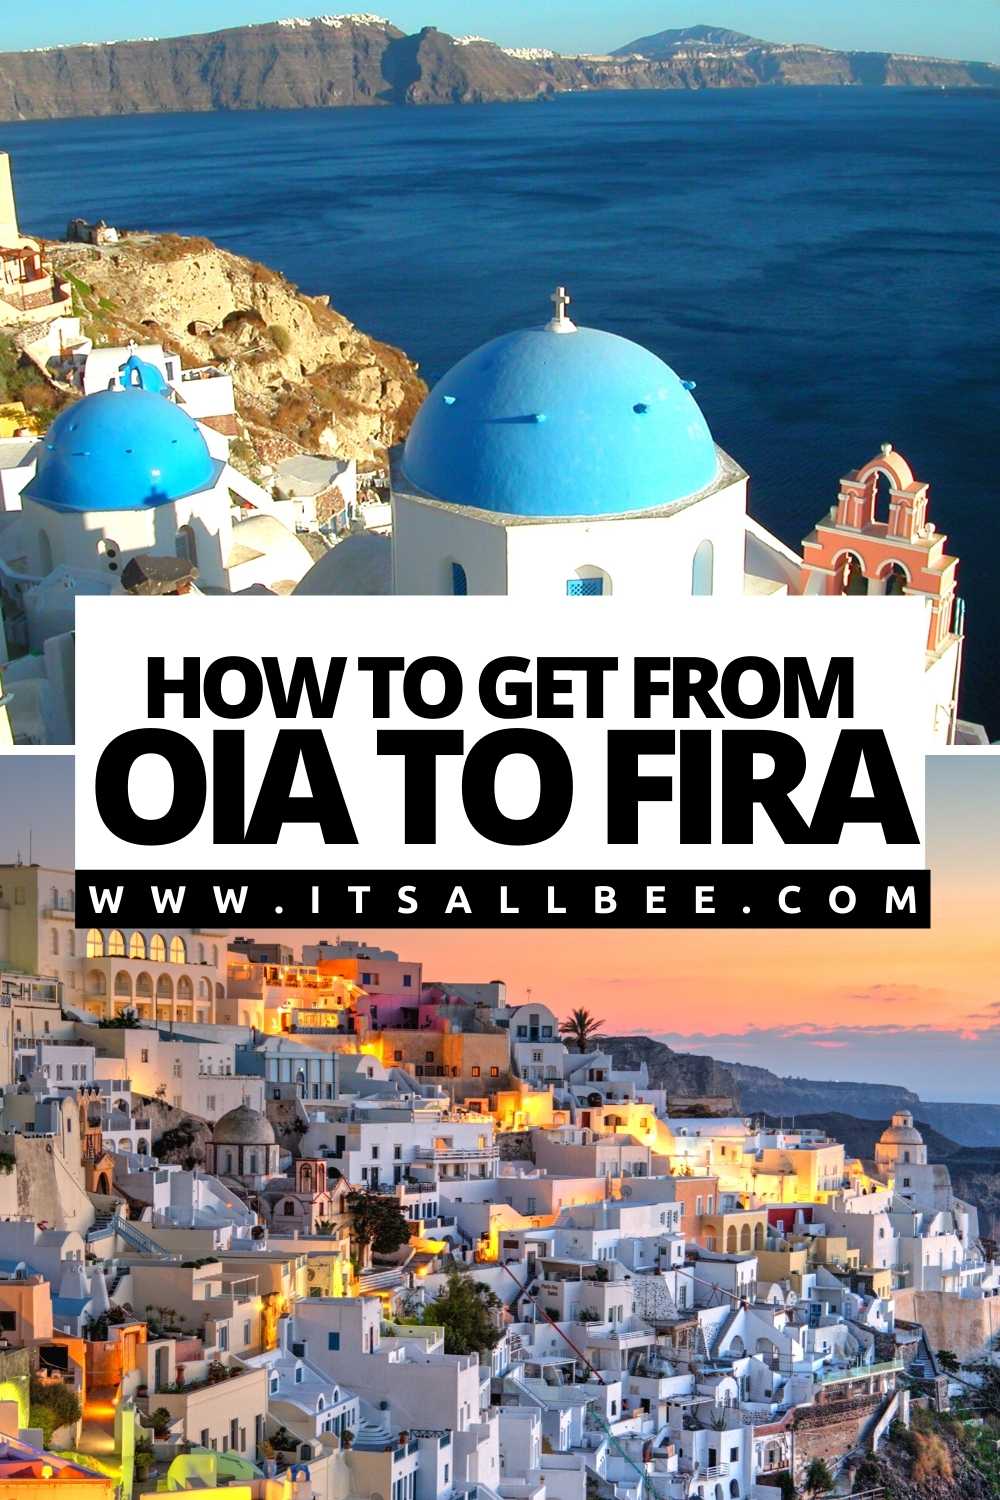  | Hike From Fira To Oia | Fira To Oia Bus | Walk From Fira To Oia | Caldera Path Between Fira And Oia | Water Taxi From Fira To Oia | Distance From Oia To Fira |